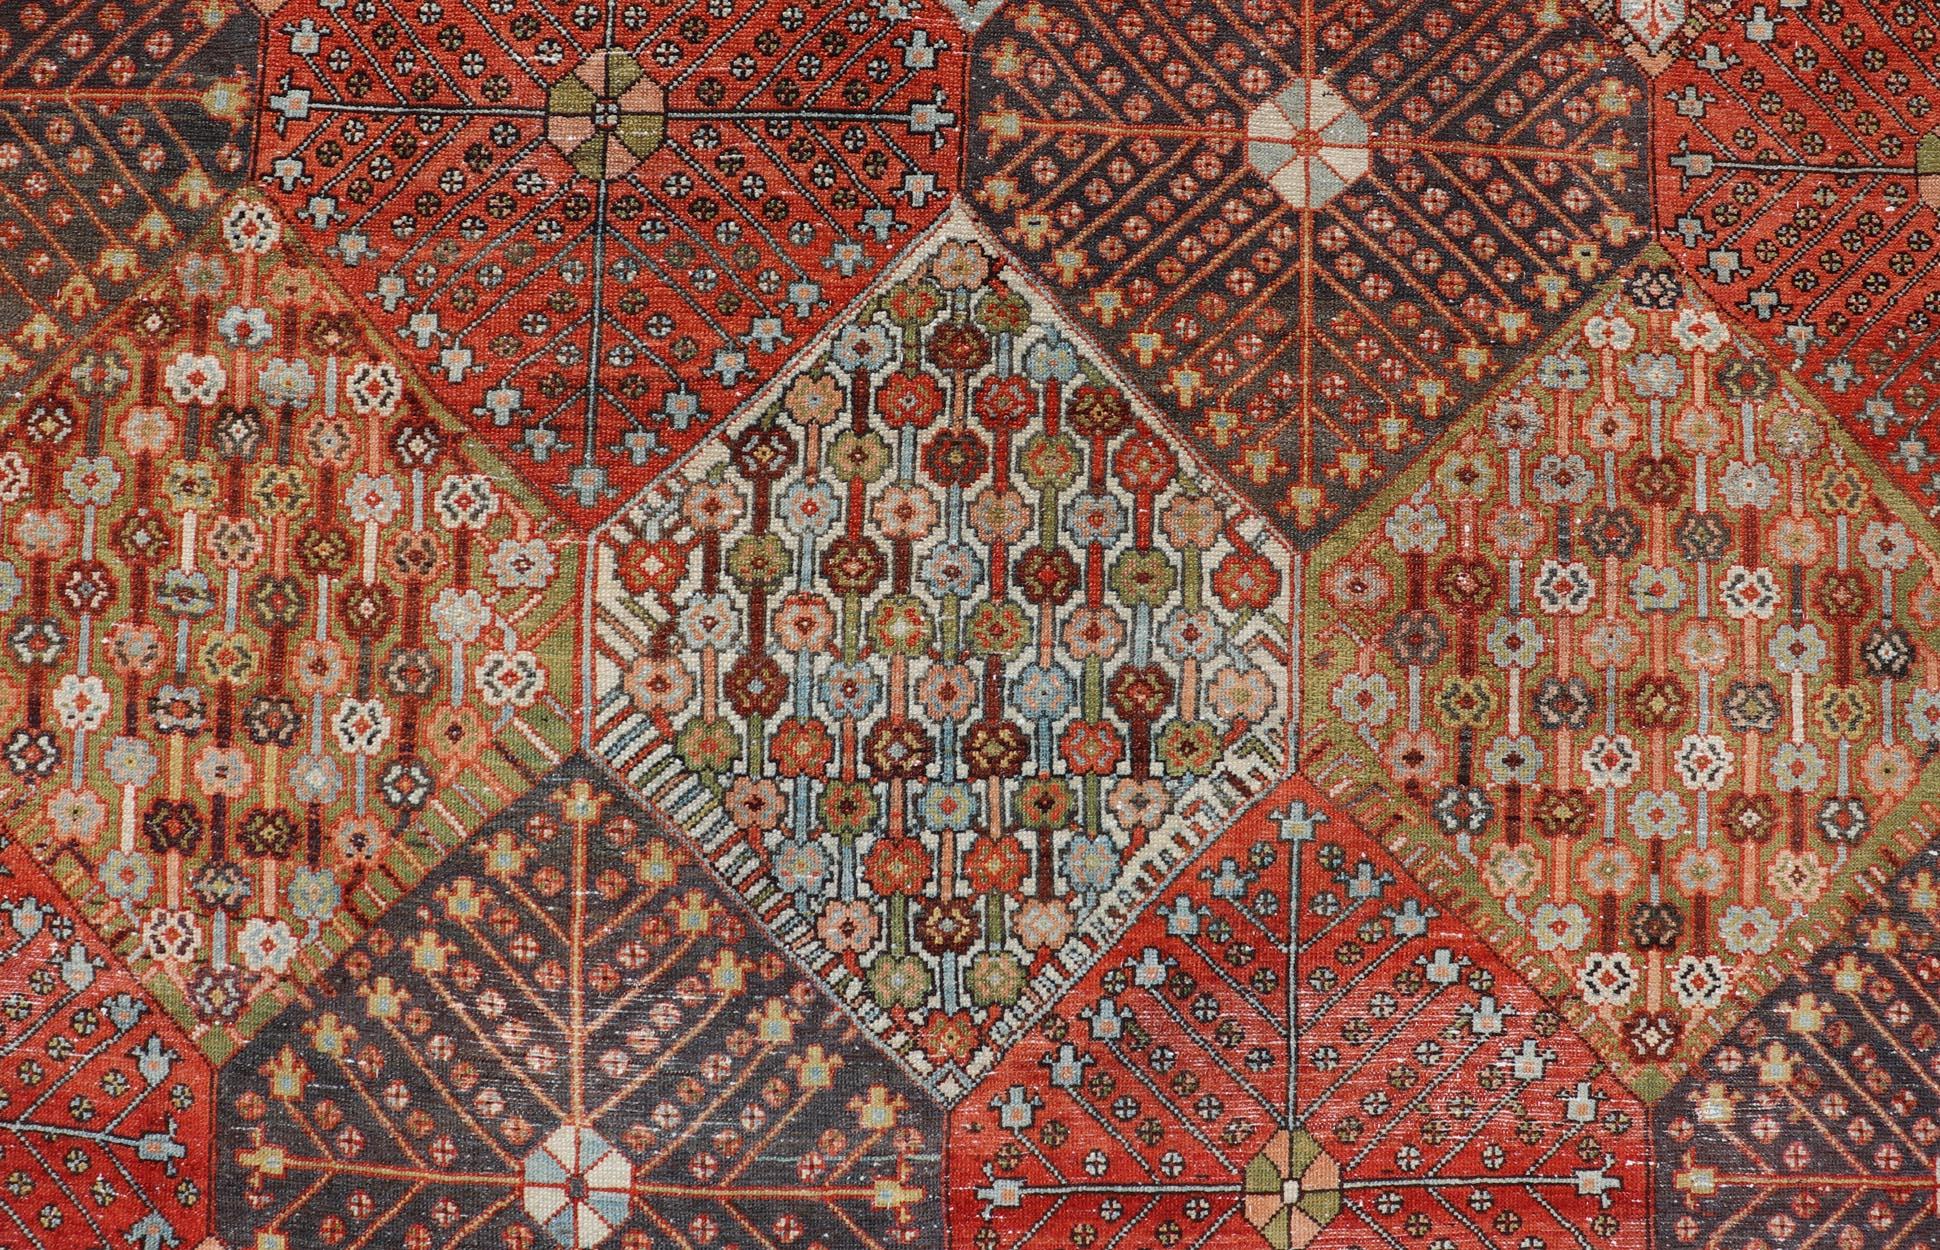 Antique Persian All-Over Large Diamond Design Bakhtiari Rug in Multi Colors. Keivan Woven Arts / rug EMB-22121-15070, country of origin / type: Iran / Bakhtiari, circa 1910
Measures: 7'1 x 9'5 
Persian Bakhtiari rugs are in fact tribal pieces that